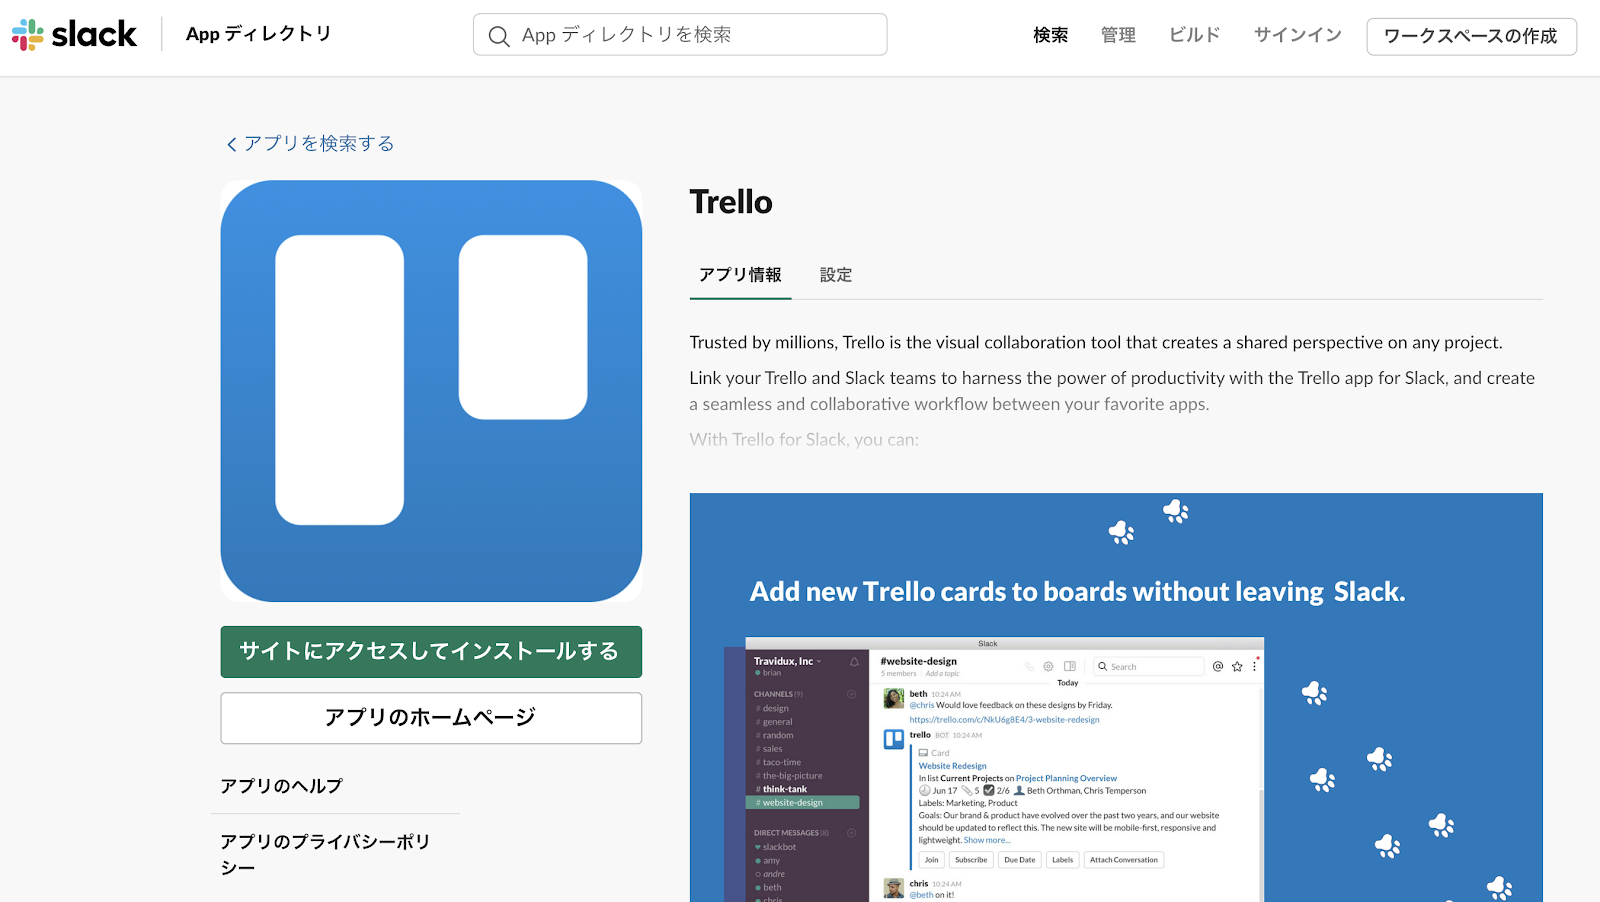 Introducing Trello for Slack